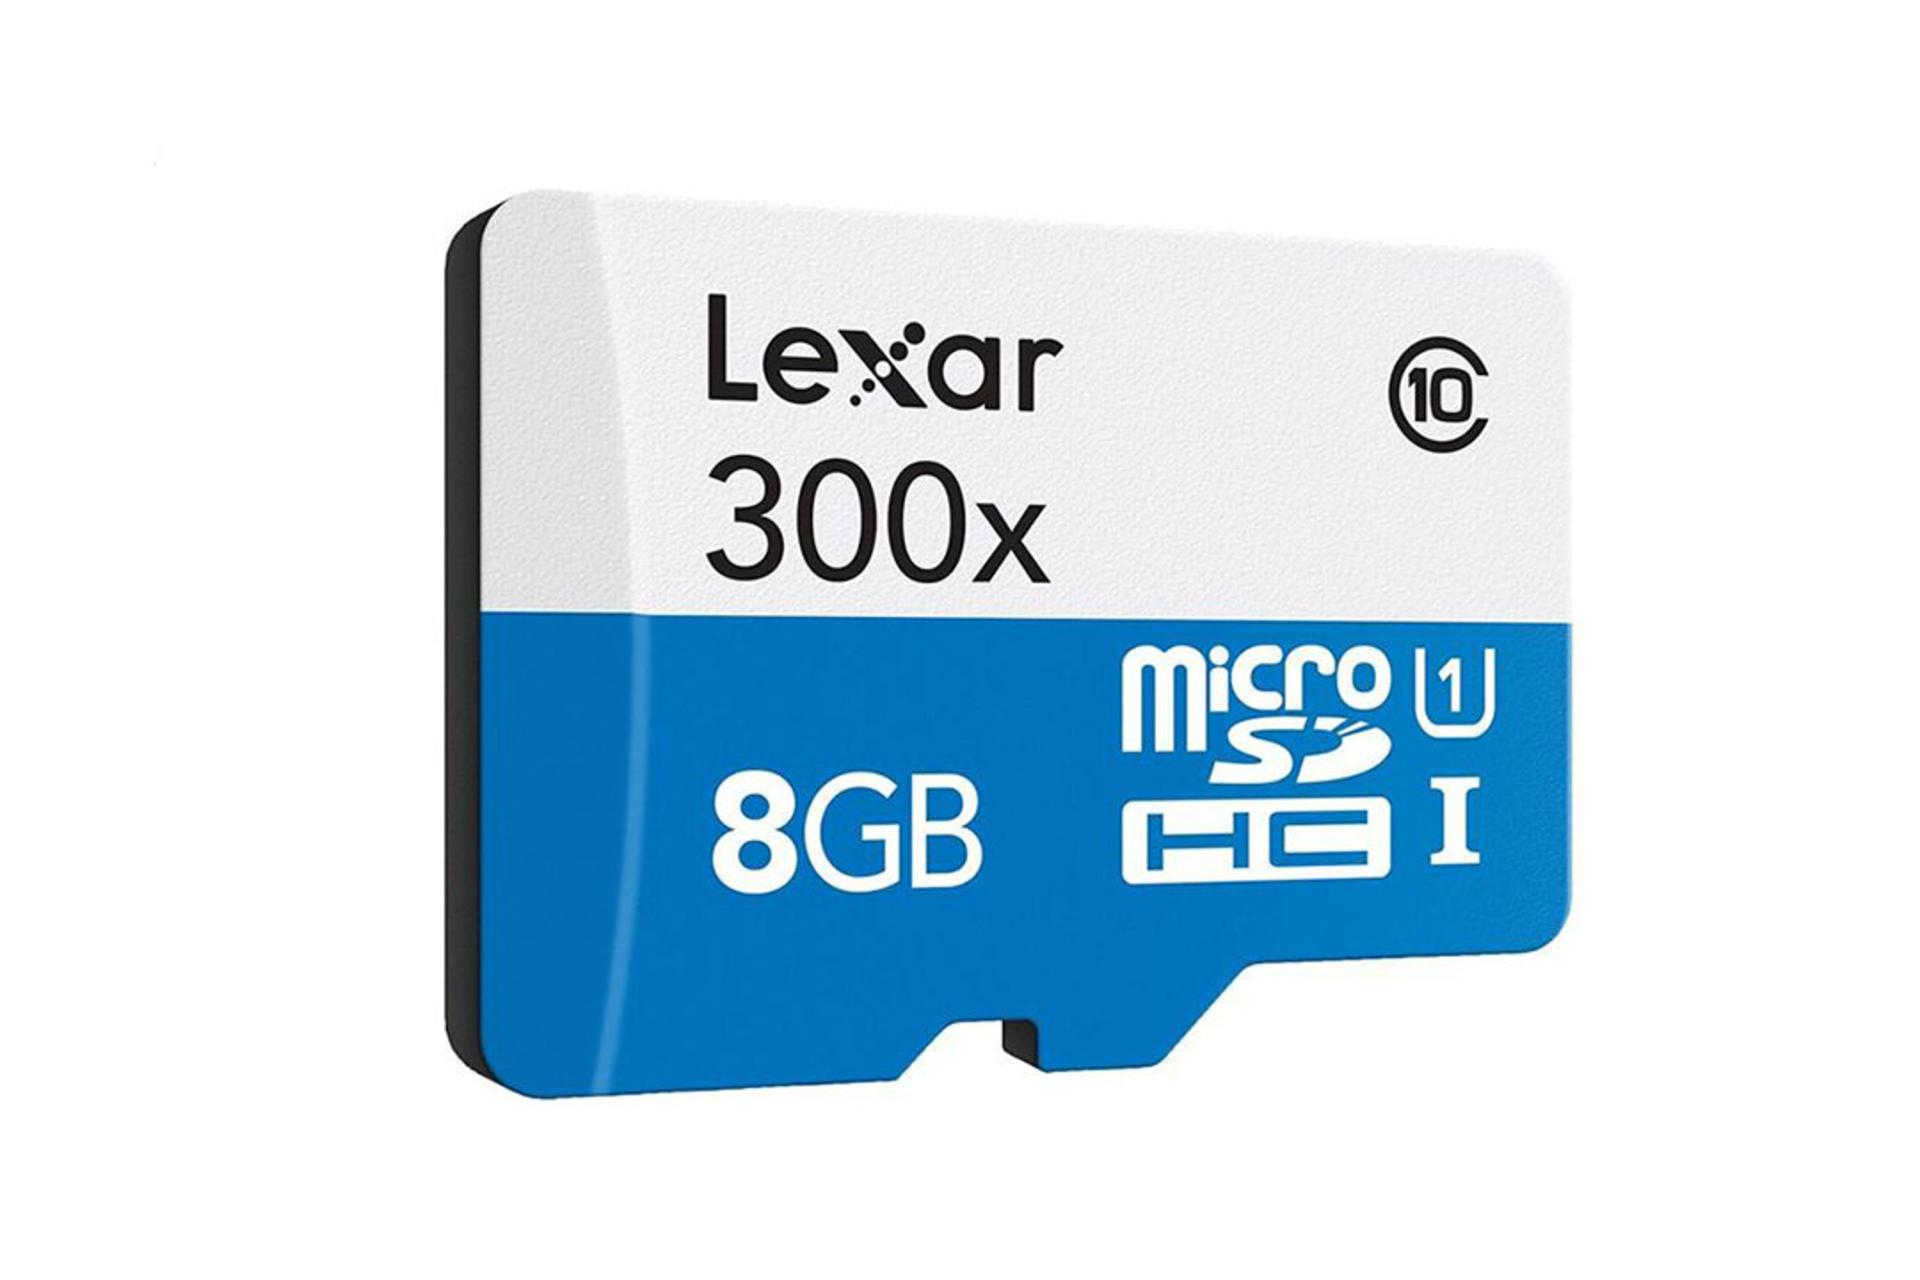 Lexar High Performance microSDHC Class 10 UHS-I U1 8GB